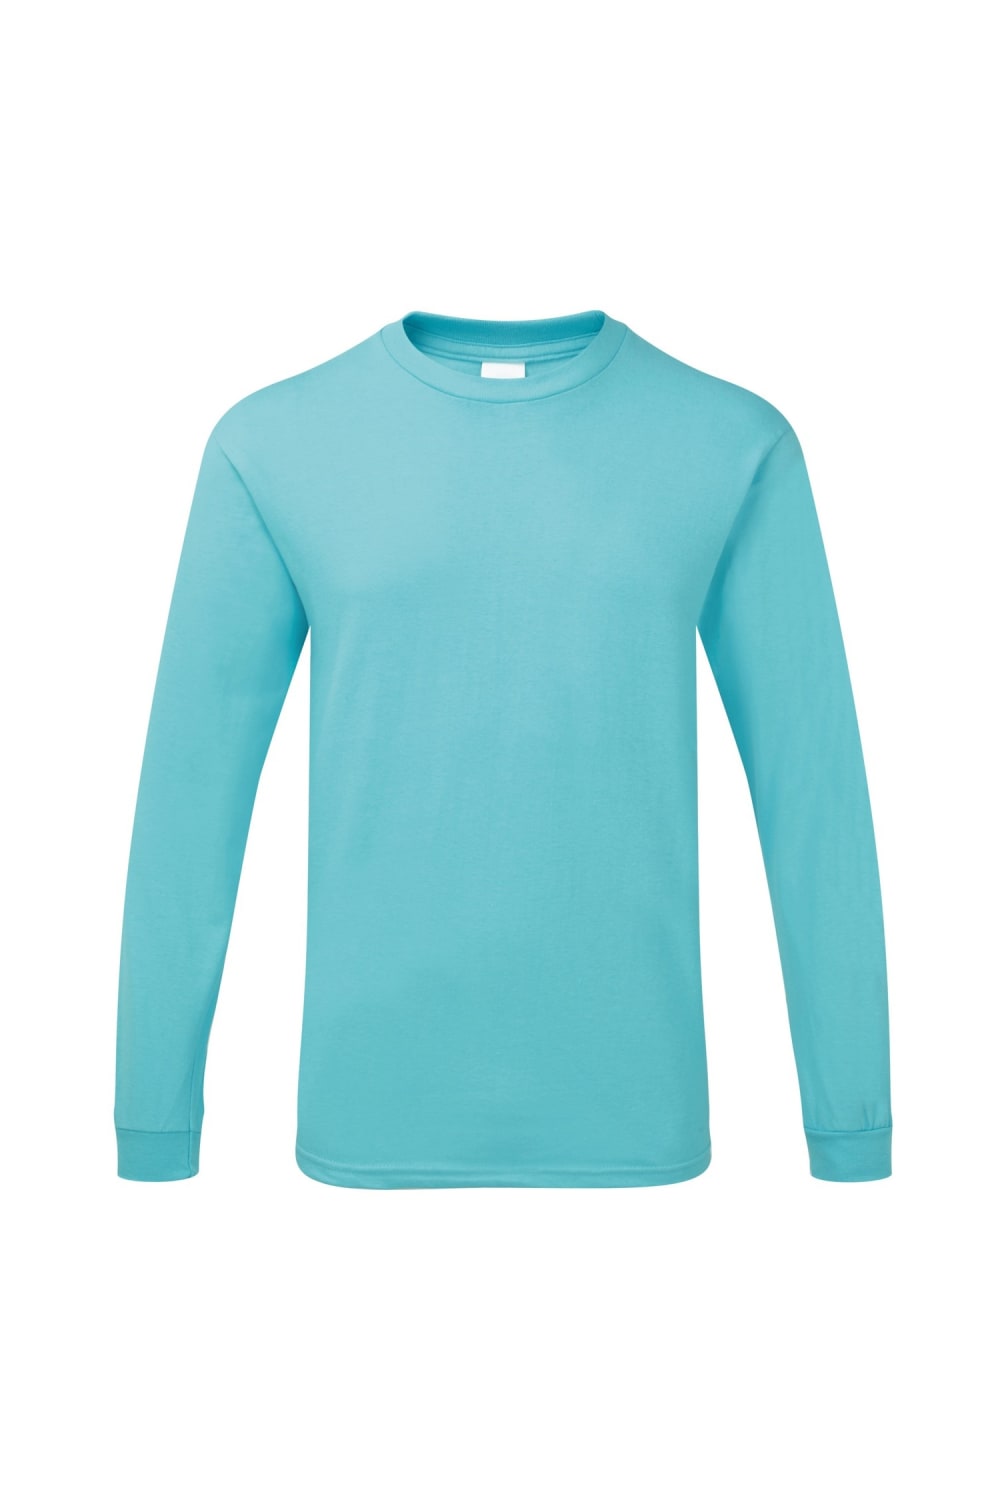 Gildan Unisex Adults Hammer Long Sleeve T-Shirt (Lagoon Blue)